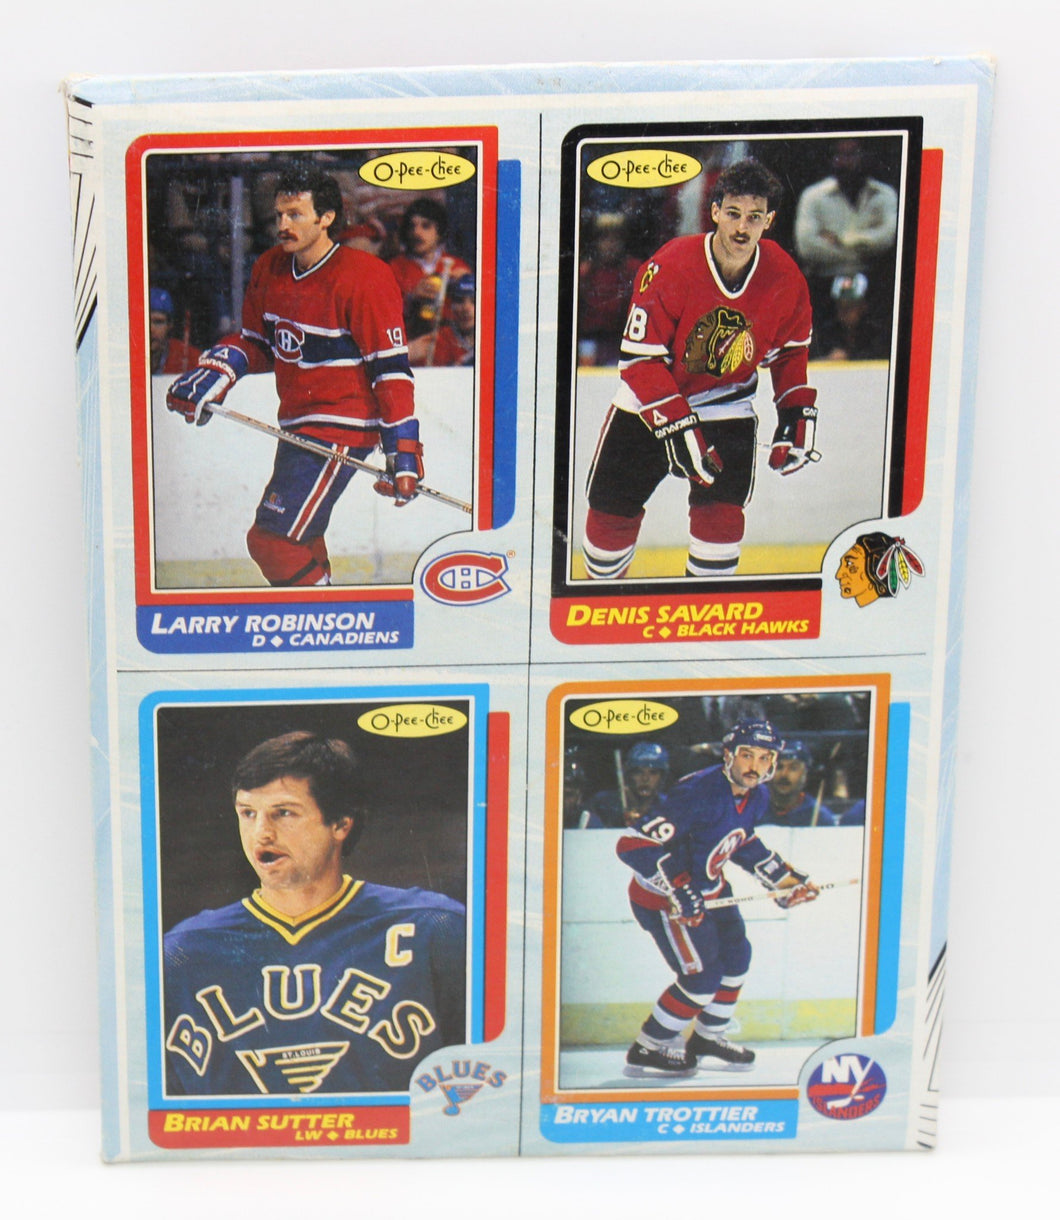 1987 O-Pee-Chee NHL Hockey Box Bottom Panel - Sutter, Trottier, Savard